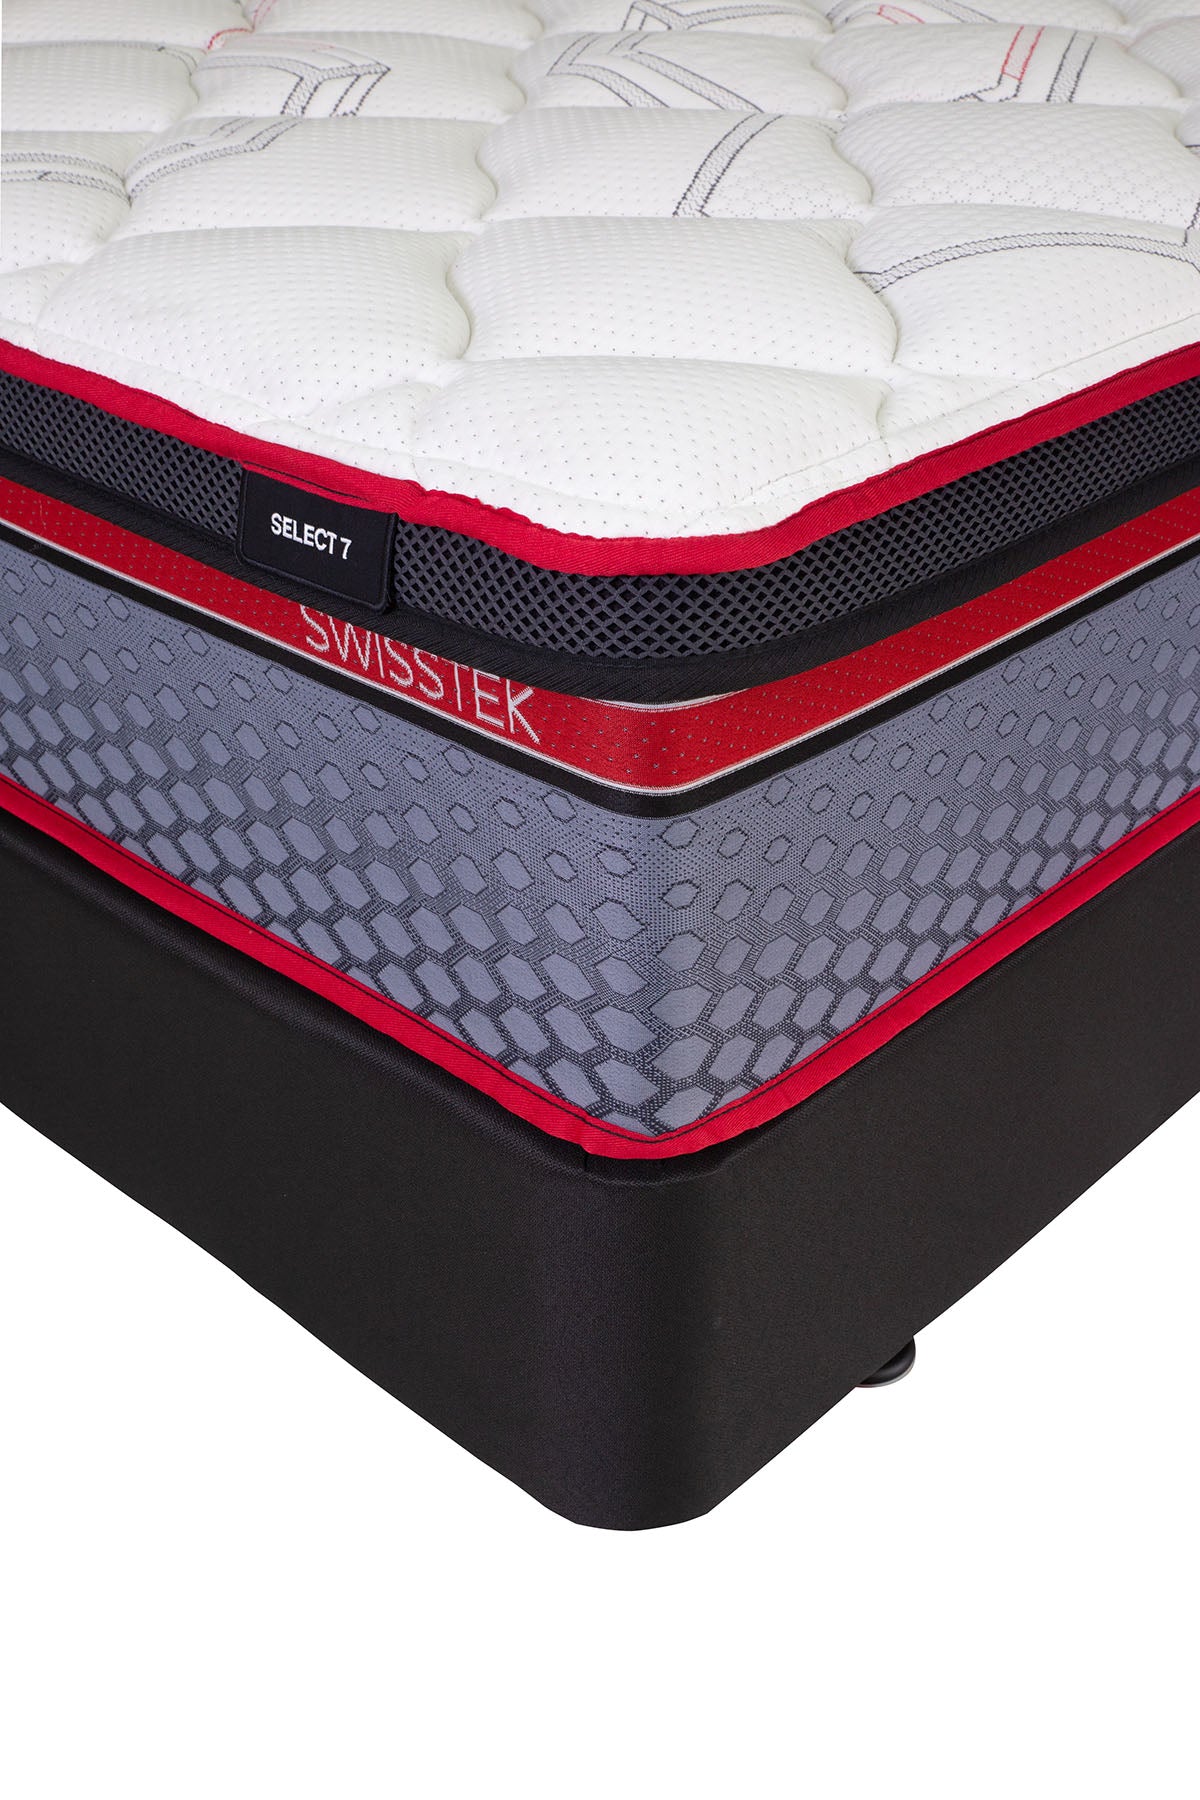 select7-super-king-mattress-3